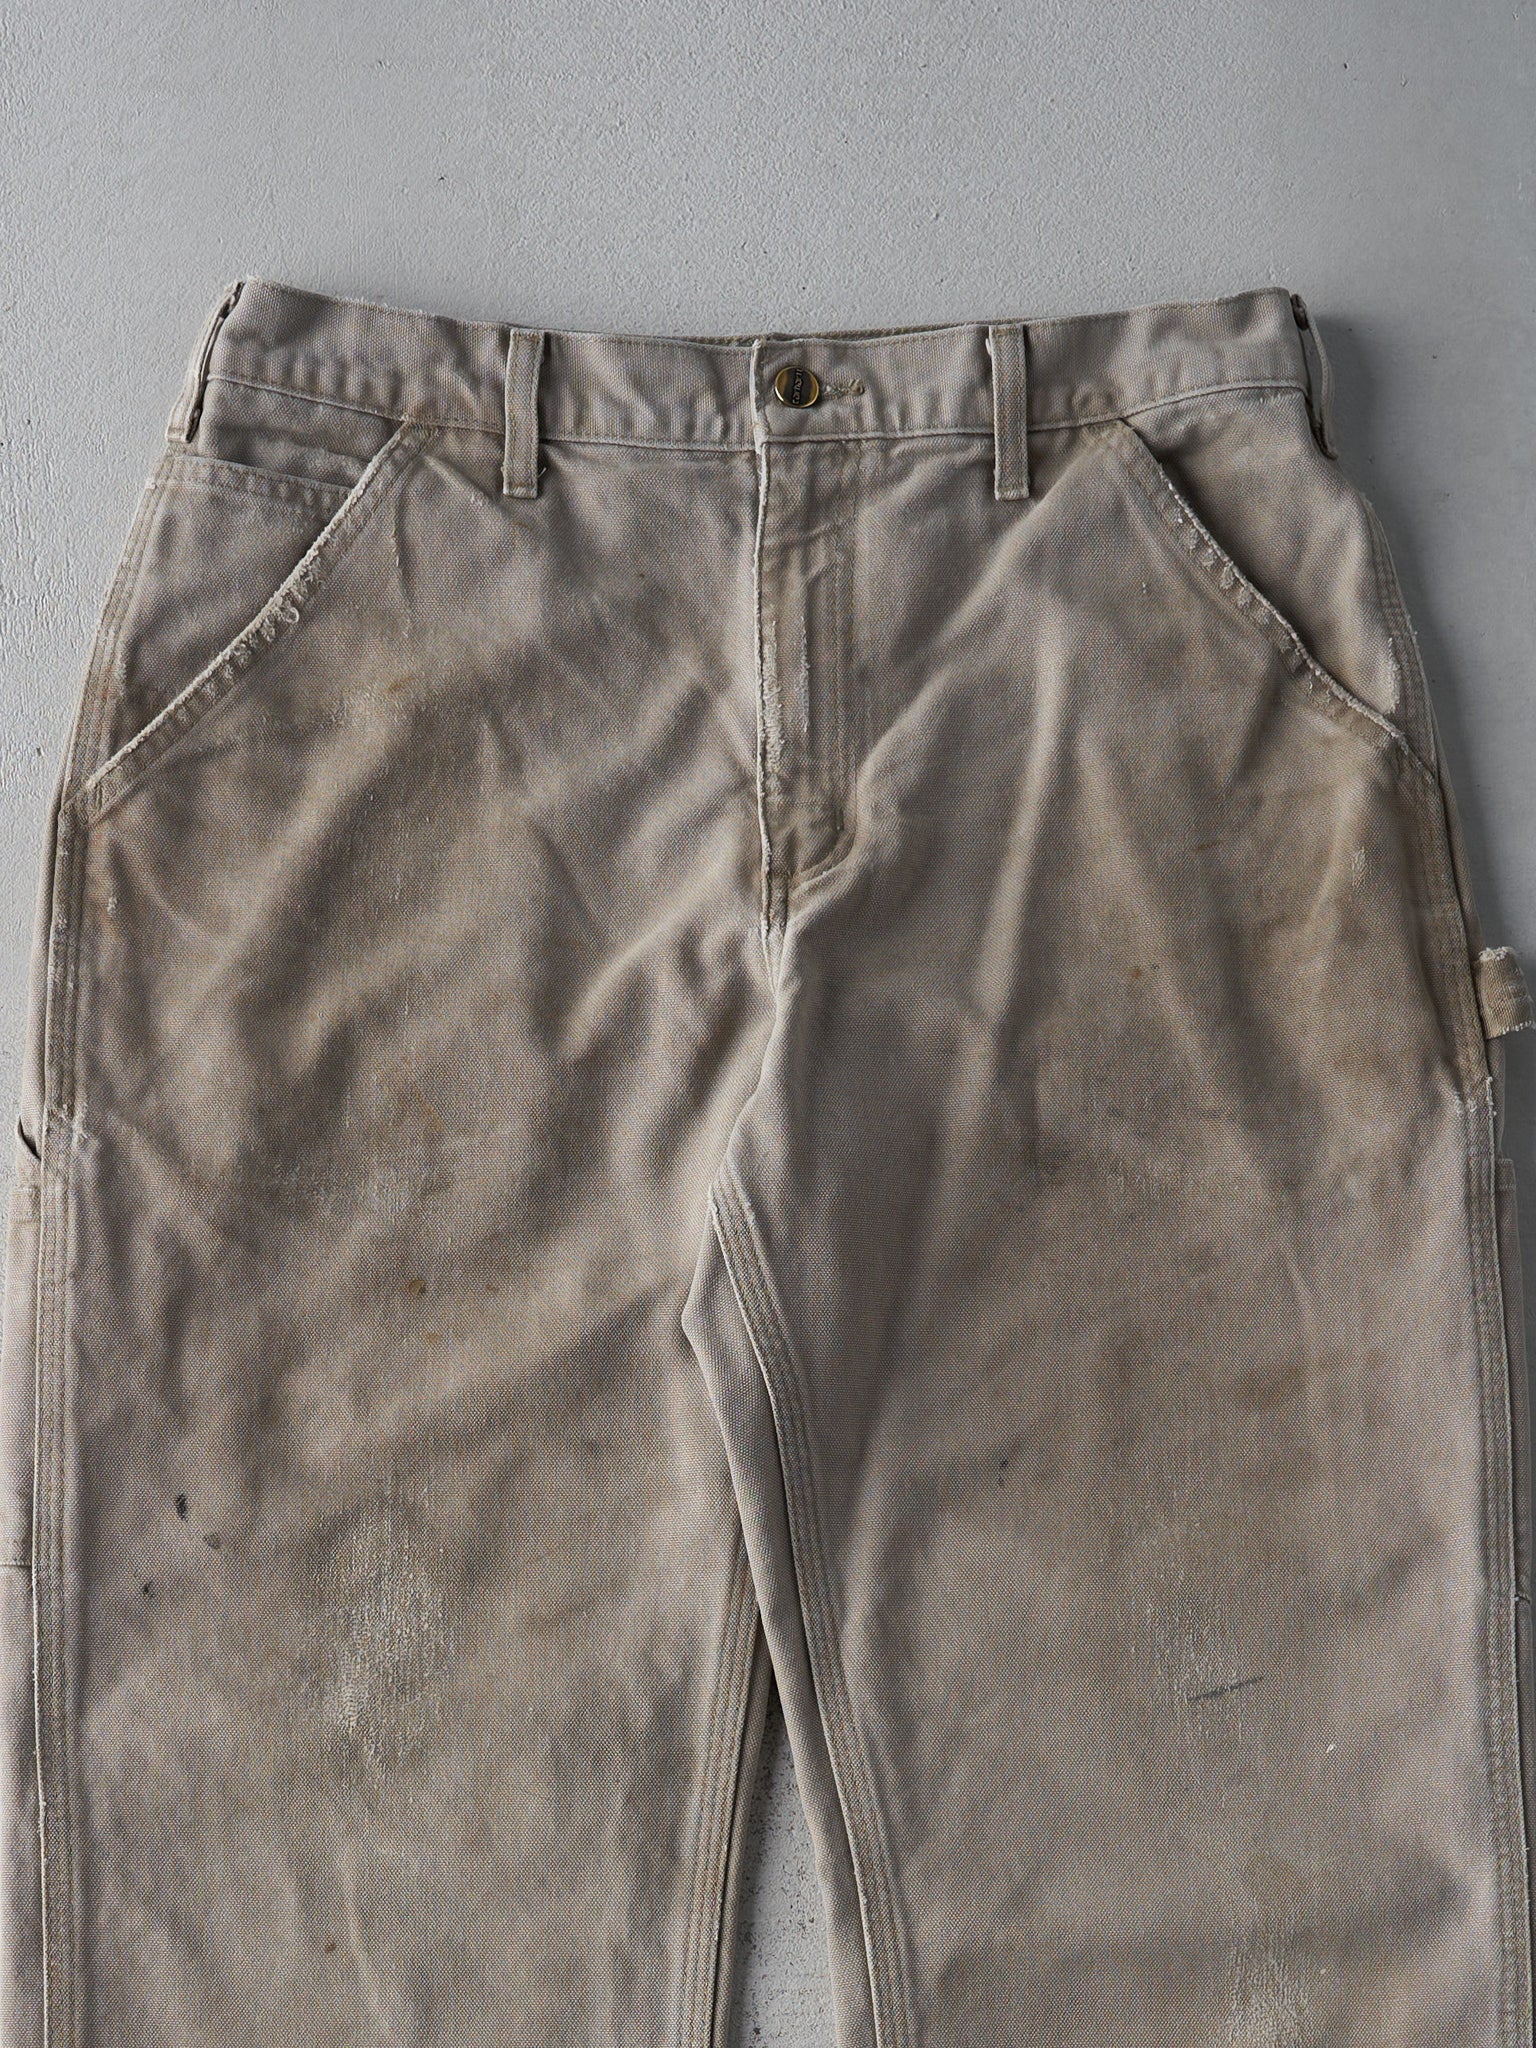 Vintage 90s Beige Dungaree Fit Carhartt Carpenter Pants (30x29)